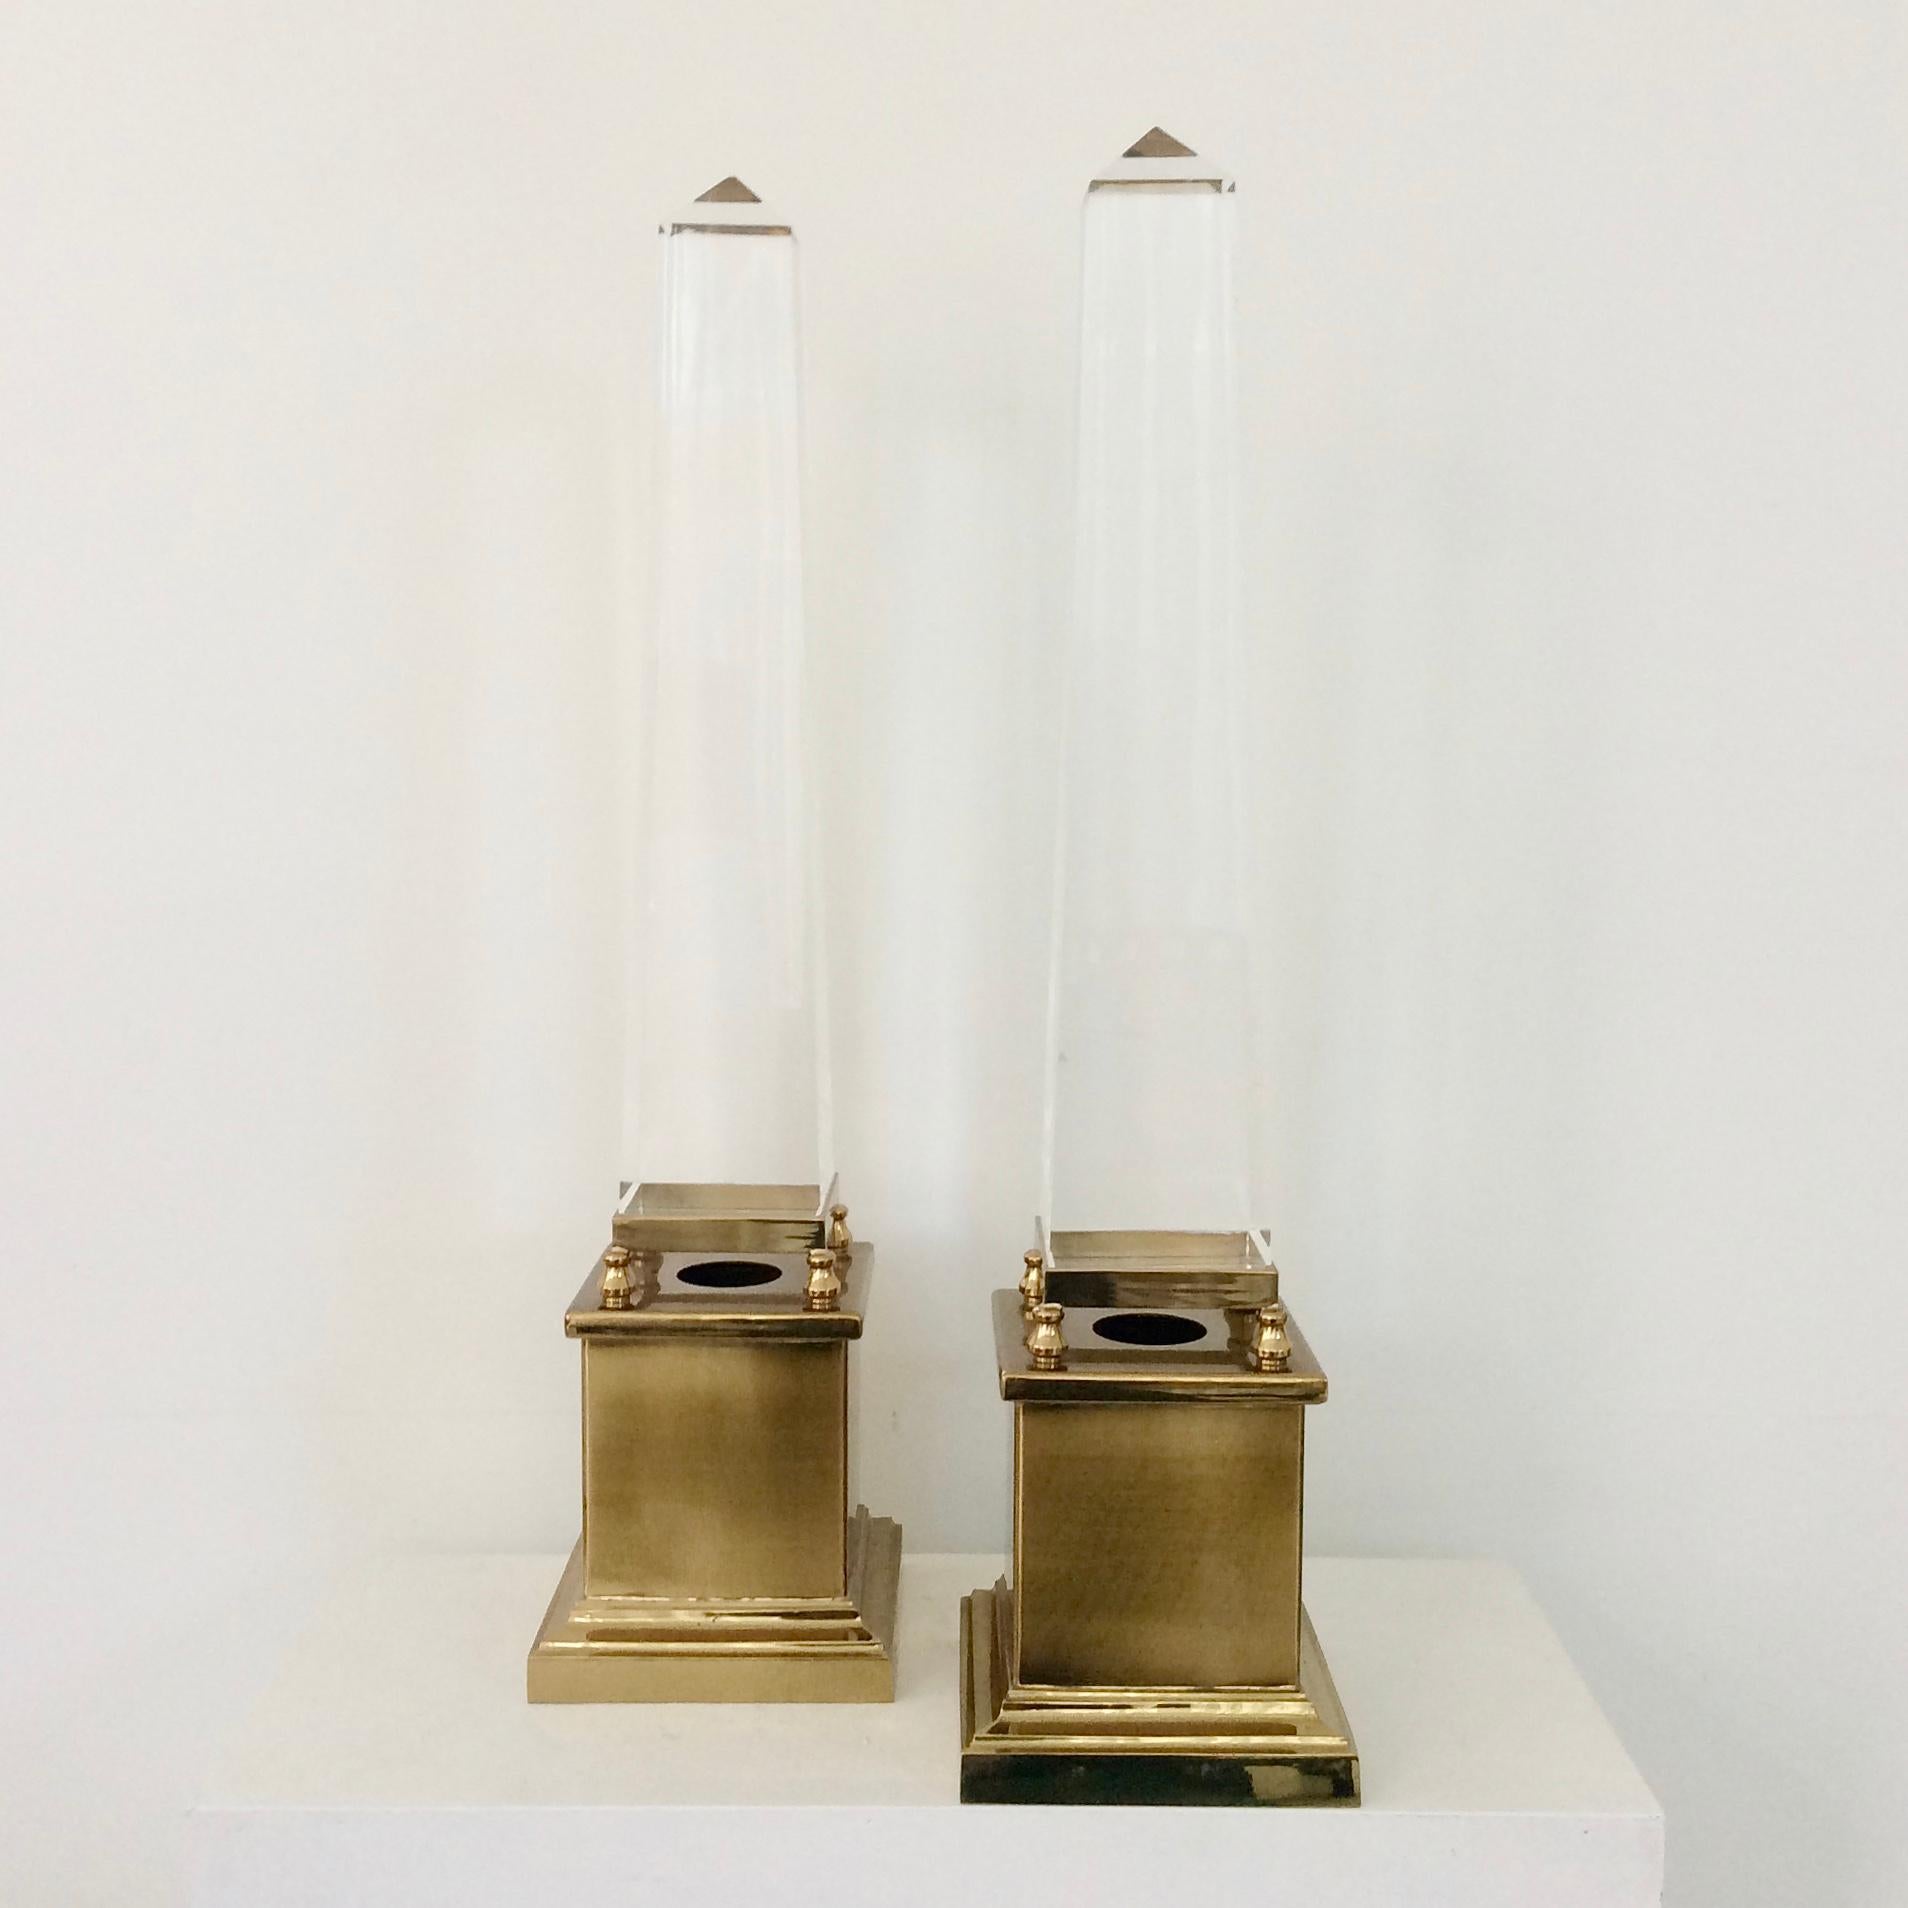 Pair of obelisk table lamps, Maison Jansen, circa 1970, France.
Lucite, brass.
One bulb E14 of 40 W.
Dimensions: 63 cm H, 15 cm W, 15 cm D.
Good original condition.
We ship worldwide

  